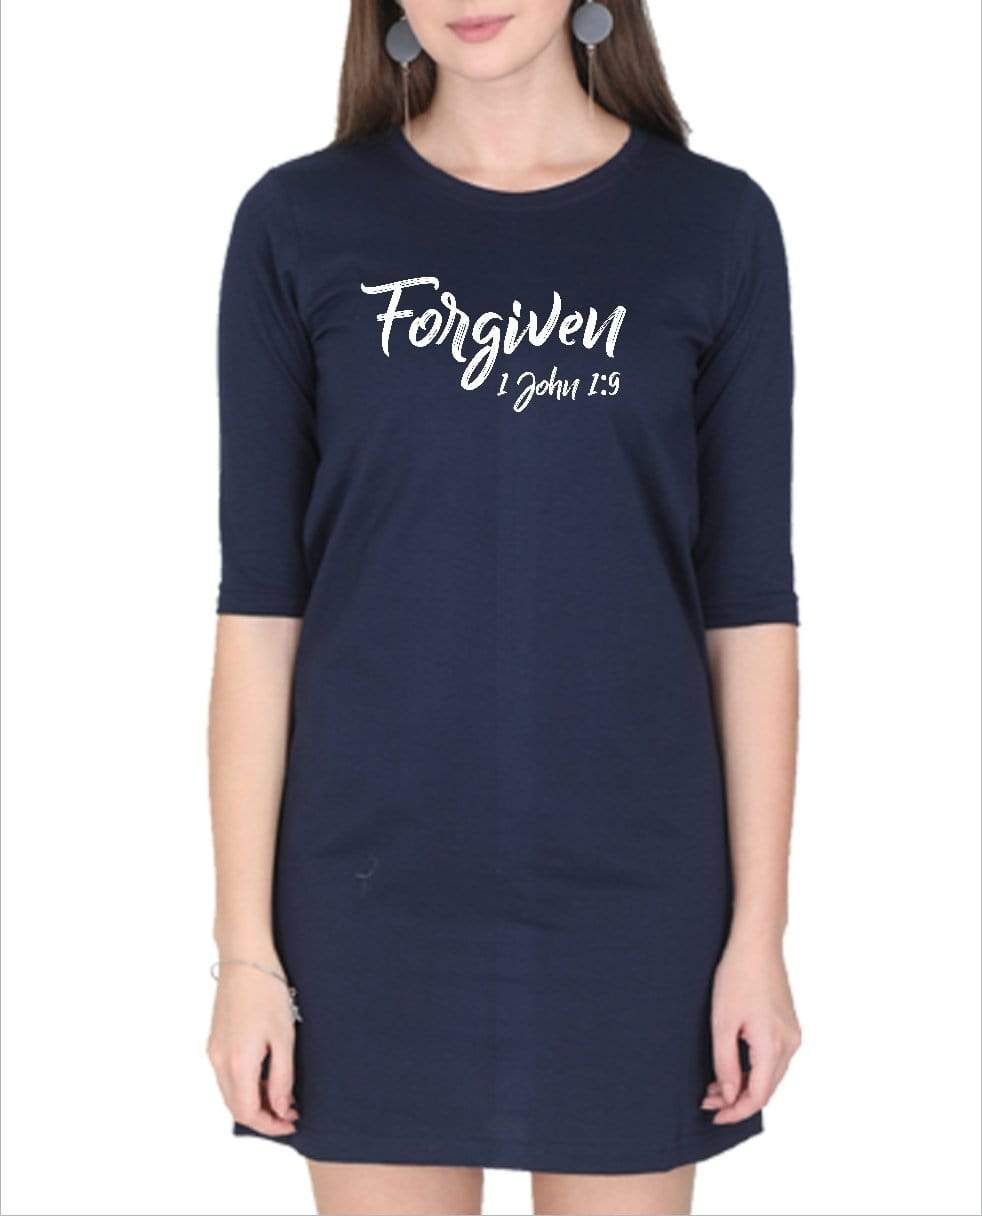 Living Words Women Round Neck T Shirt S / Navy Blue Forgiven 1 John 1:9